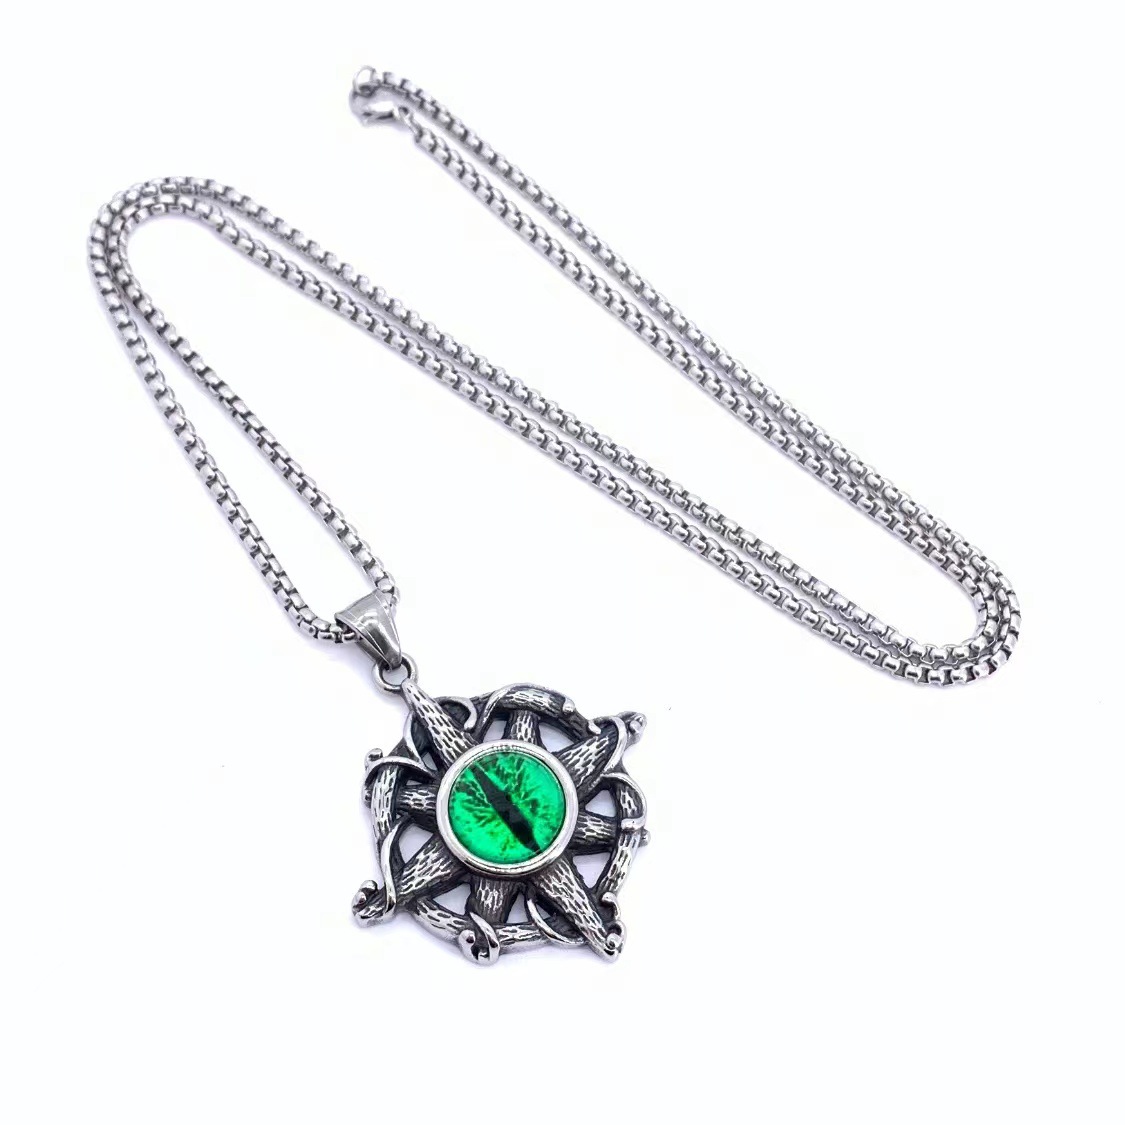 Green-eye pendant with 70CM chain